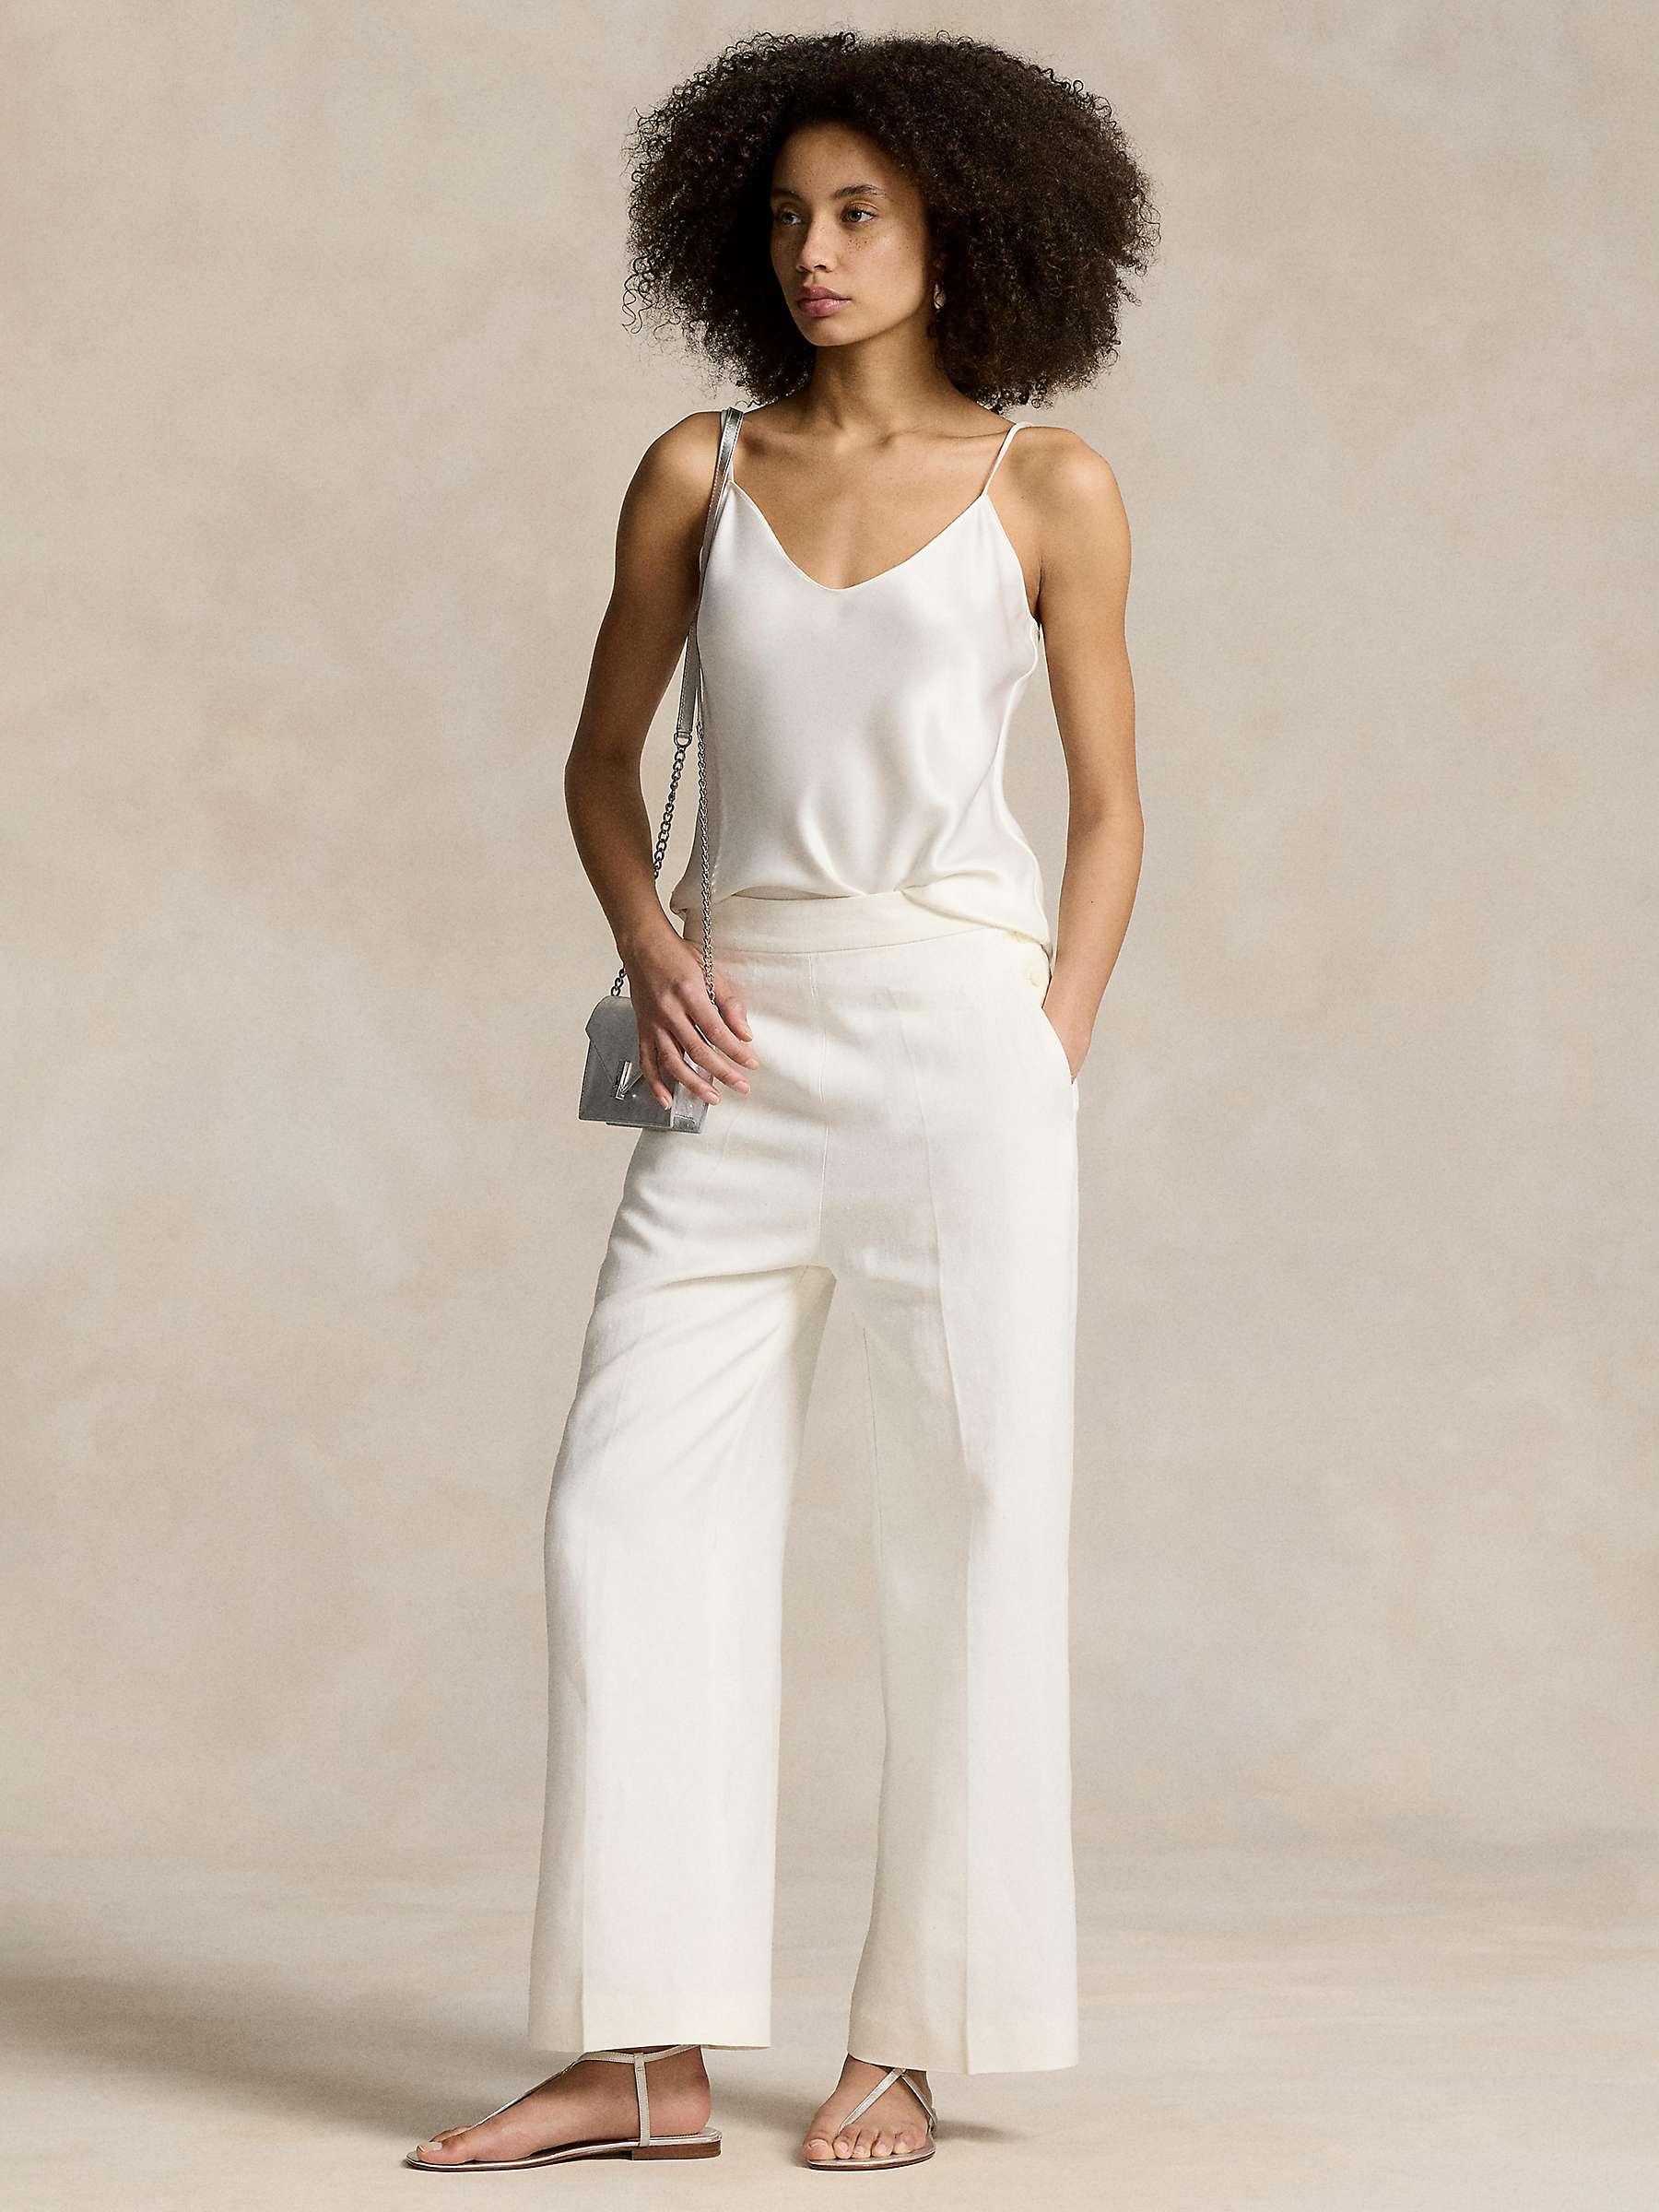 Buy Polo Ralph Lauren Hemp Cotton Blend Wide Leg Trousers, White Online at johnlewis.com